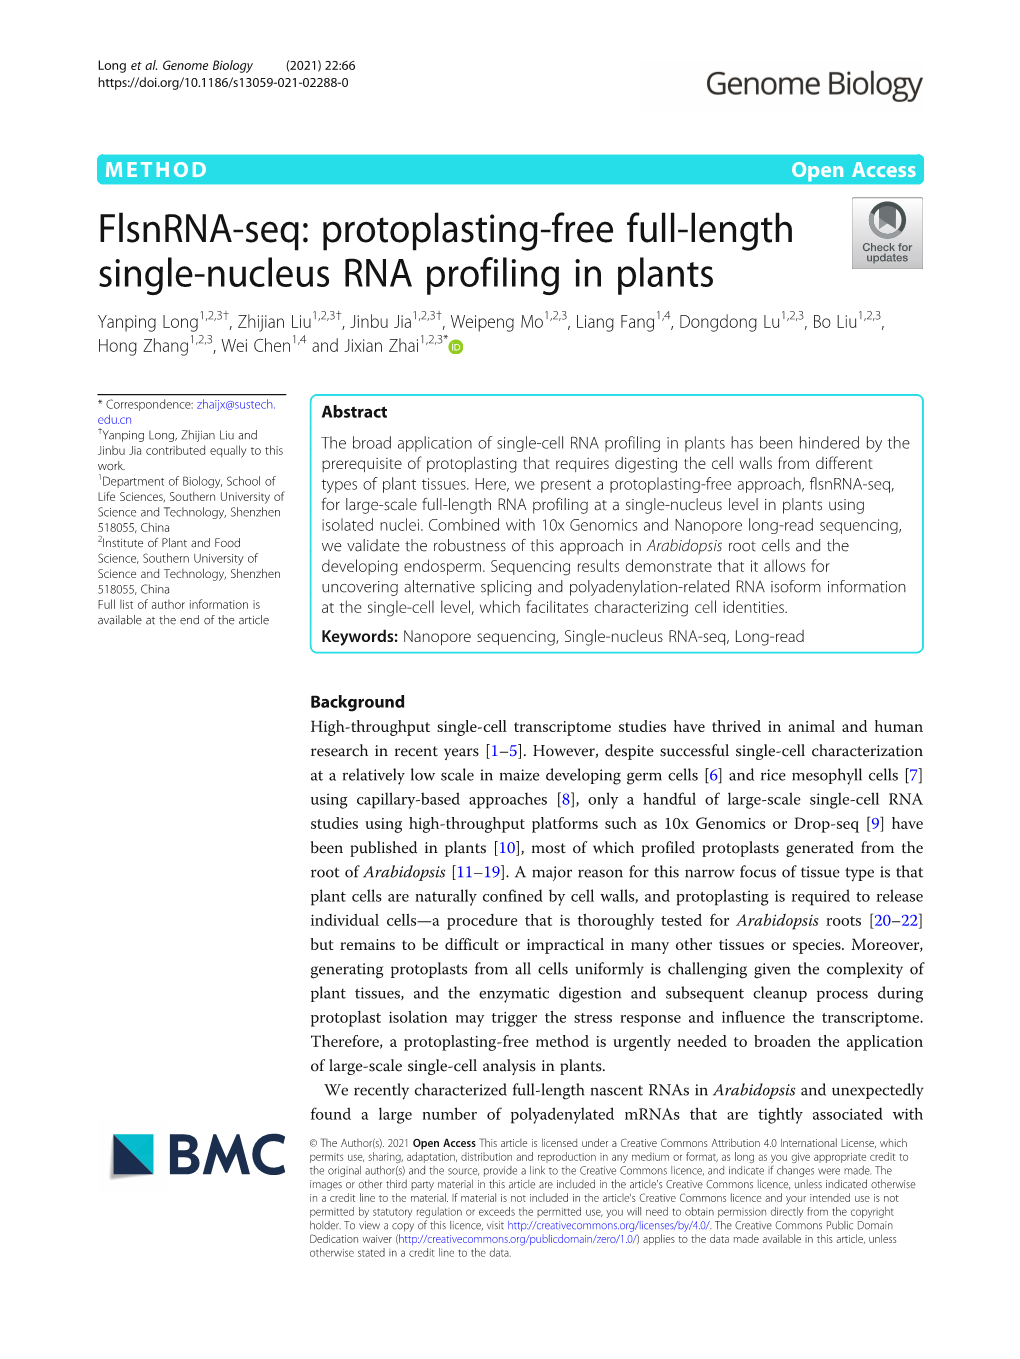 Flsnrna-Seq: Protoplasting-Free Full-Length Single-Nucleus RNA